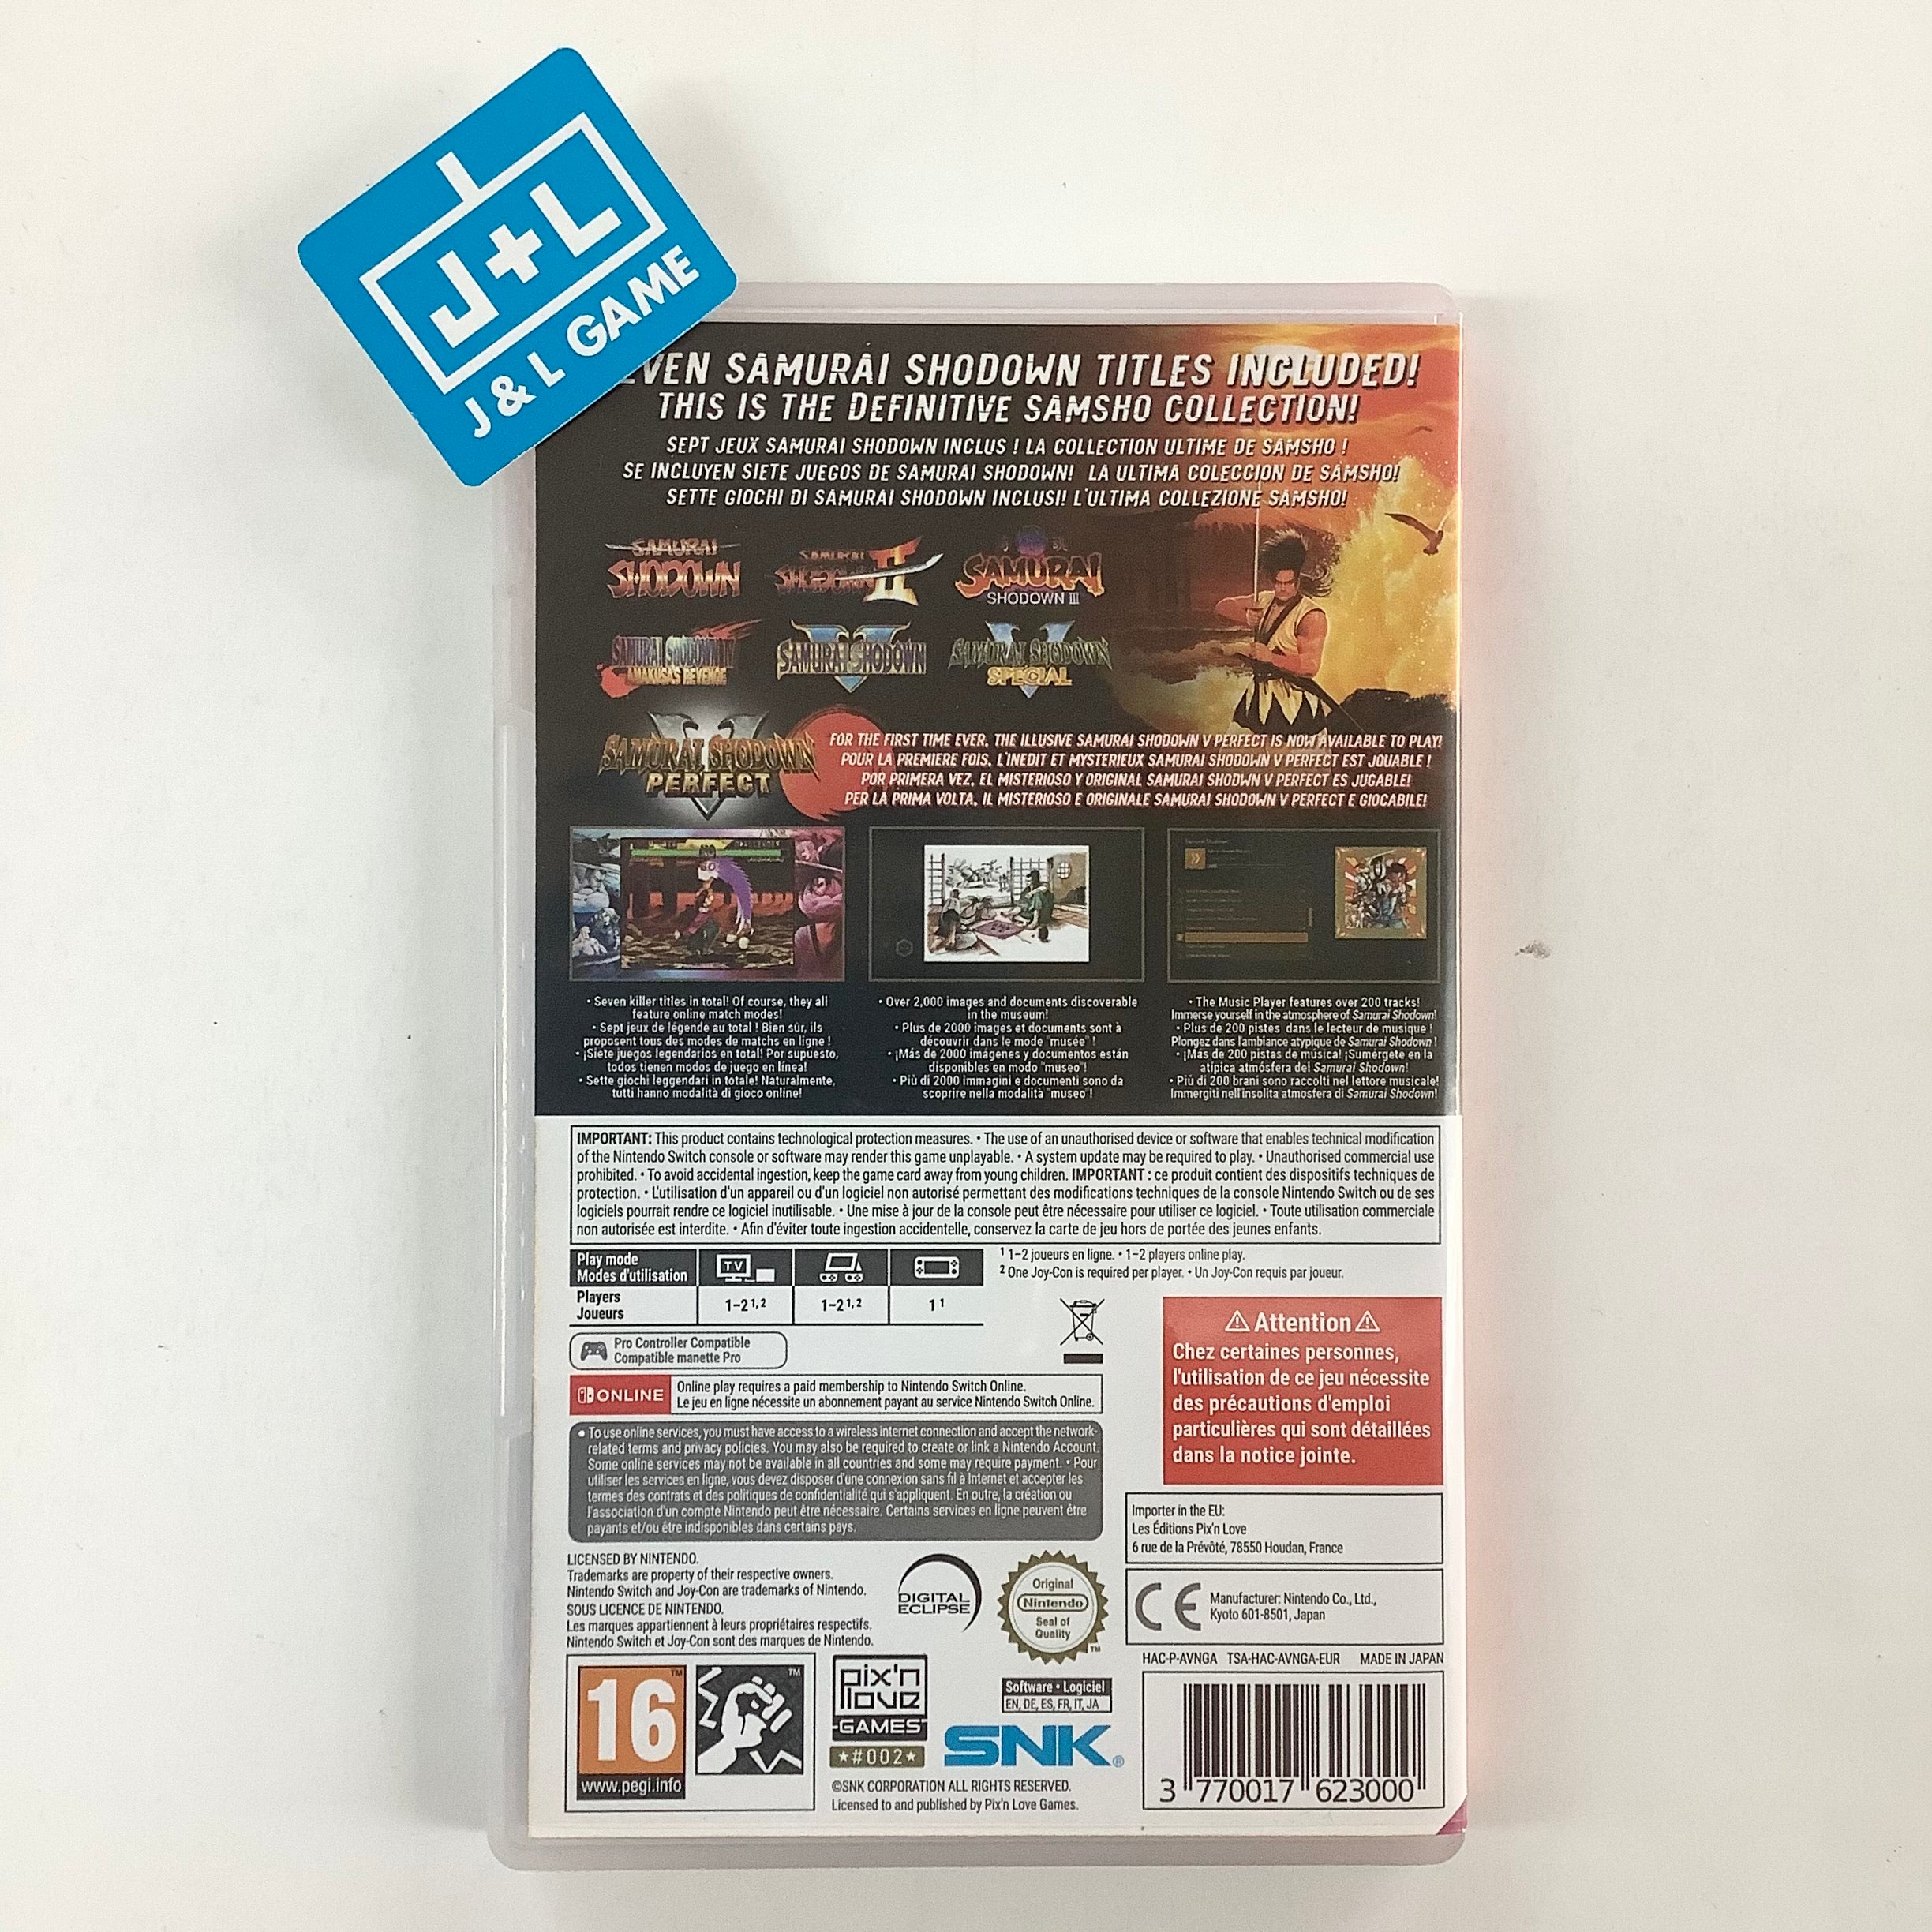 Samurai Shodown NeoGeo Collection - (NSW) Nintendo Switch [Pre-Owned] (European Import) Video Games SNK   